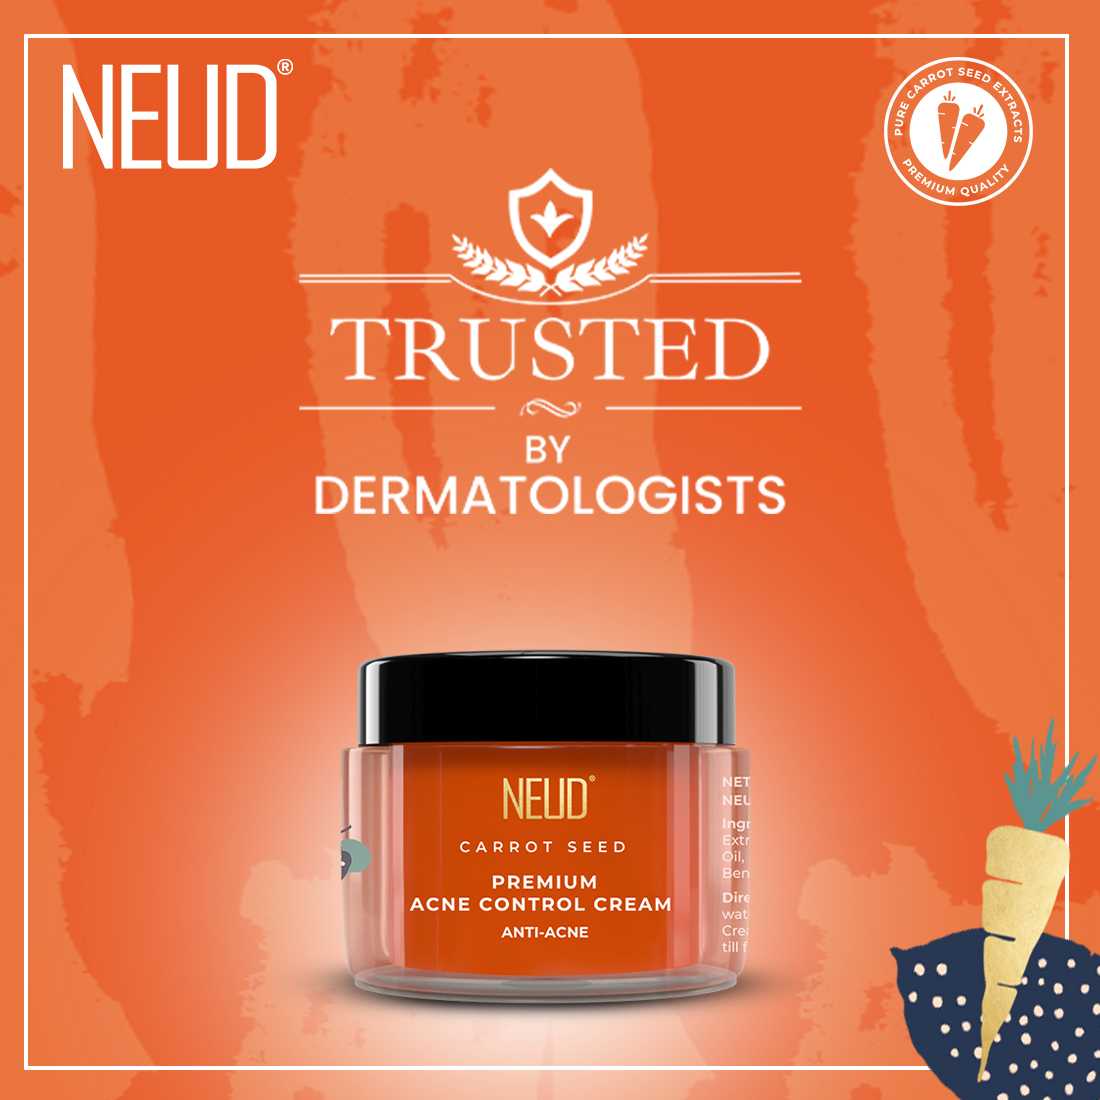 NEUD Carrot Seed Acne Control Cream for Men & Women - 50g